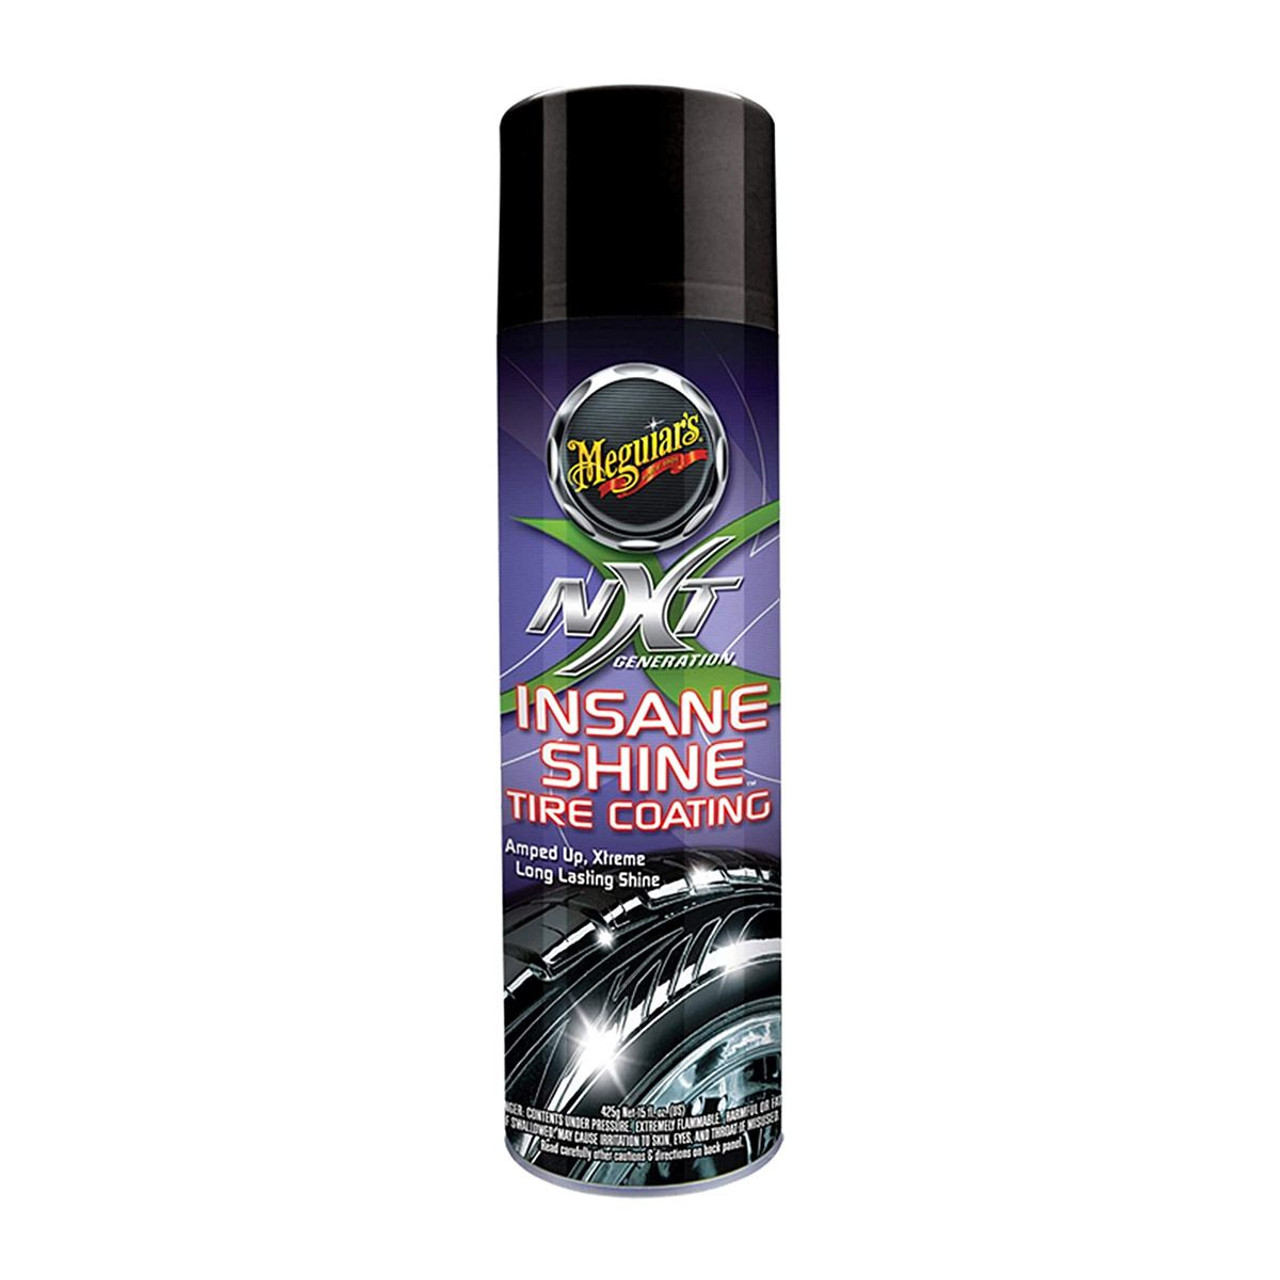 Meguiars Hot Shine Tire Spray Aerosol